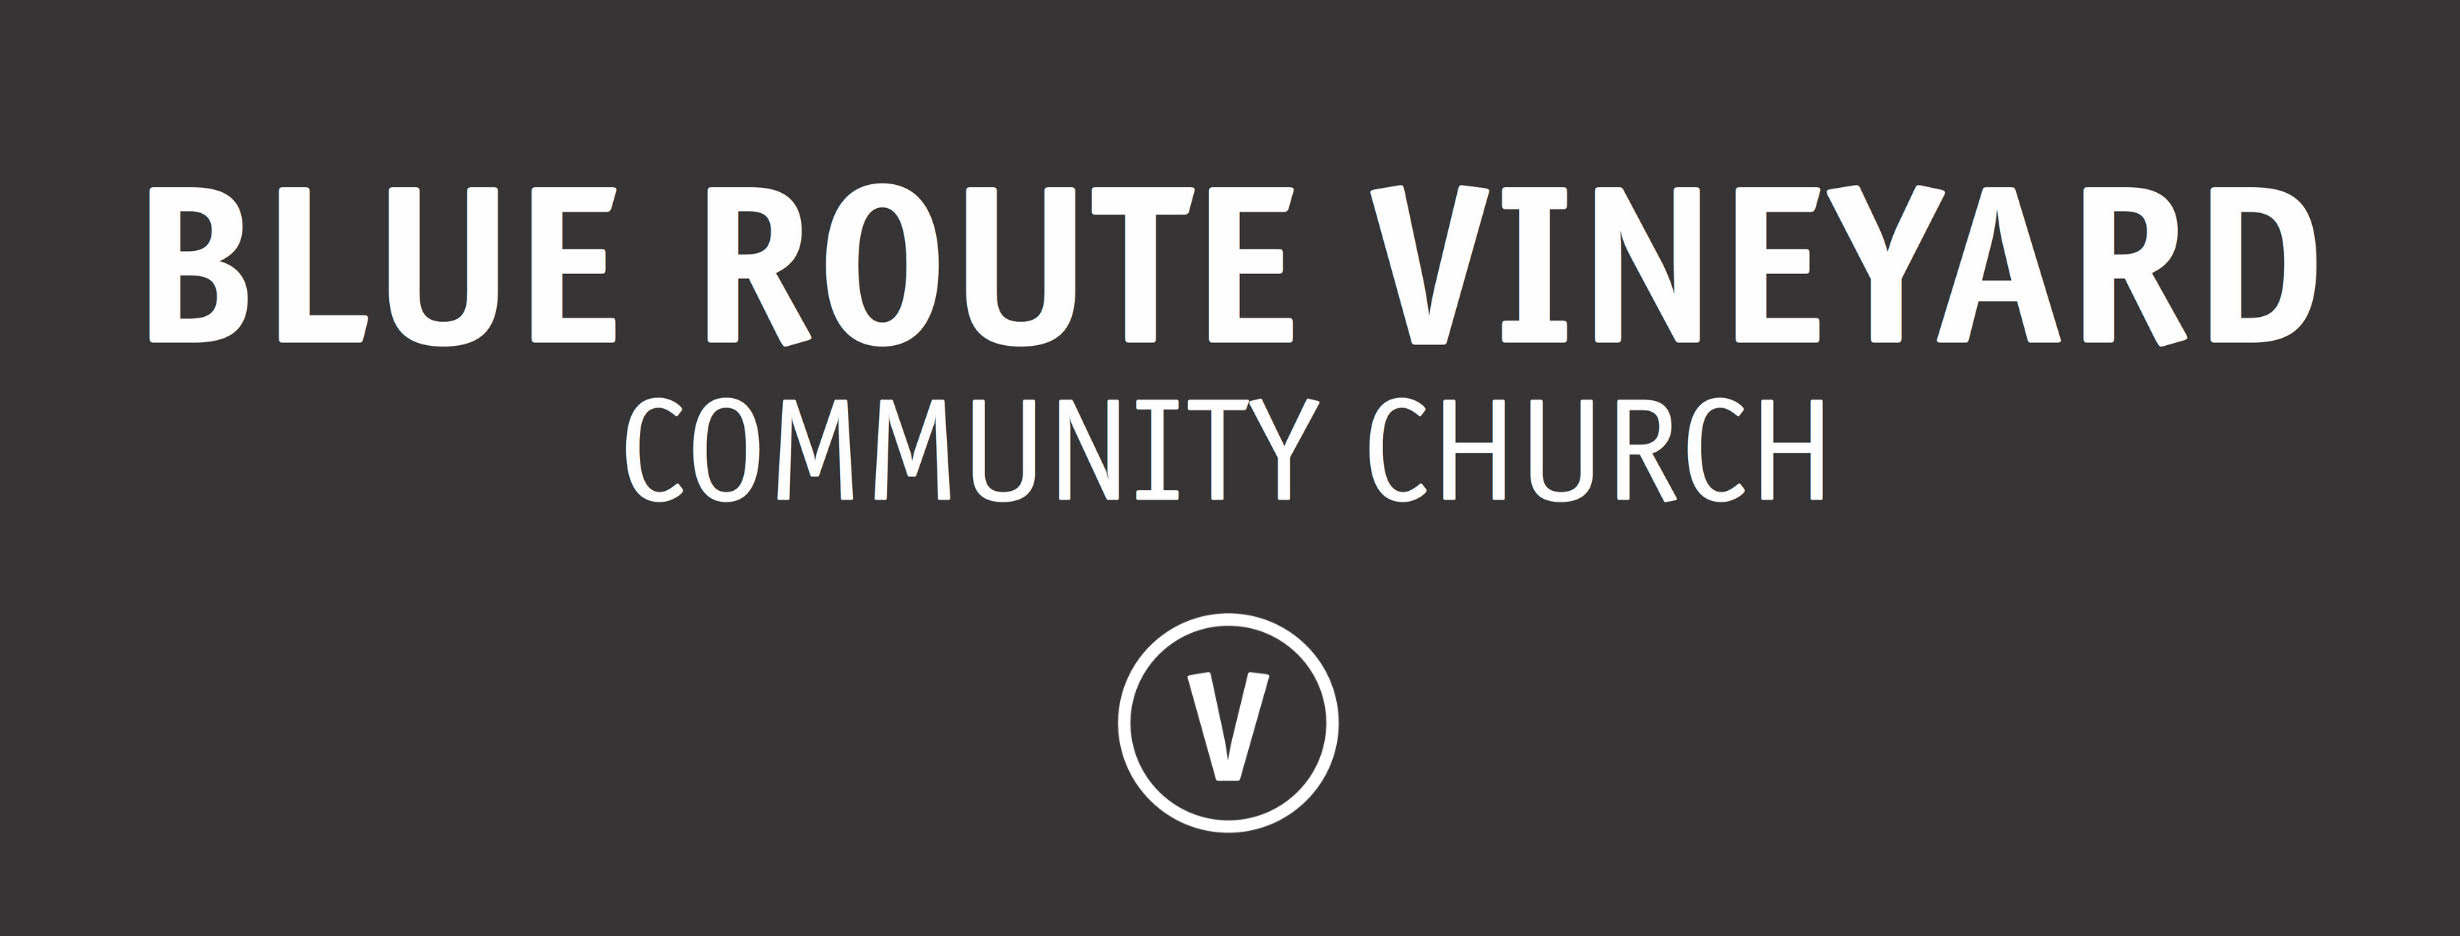 Blue Route Vineyard Community Church